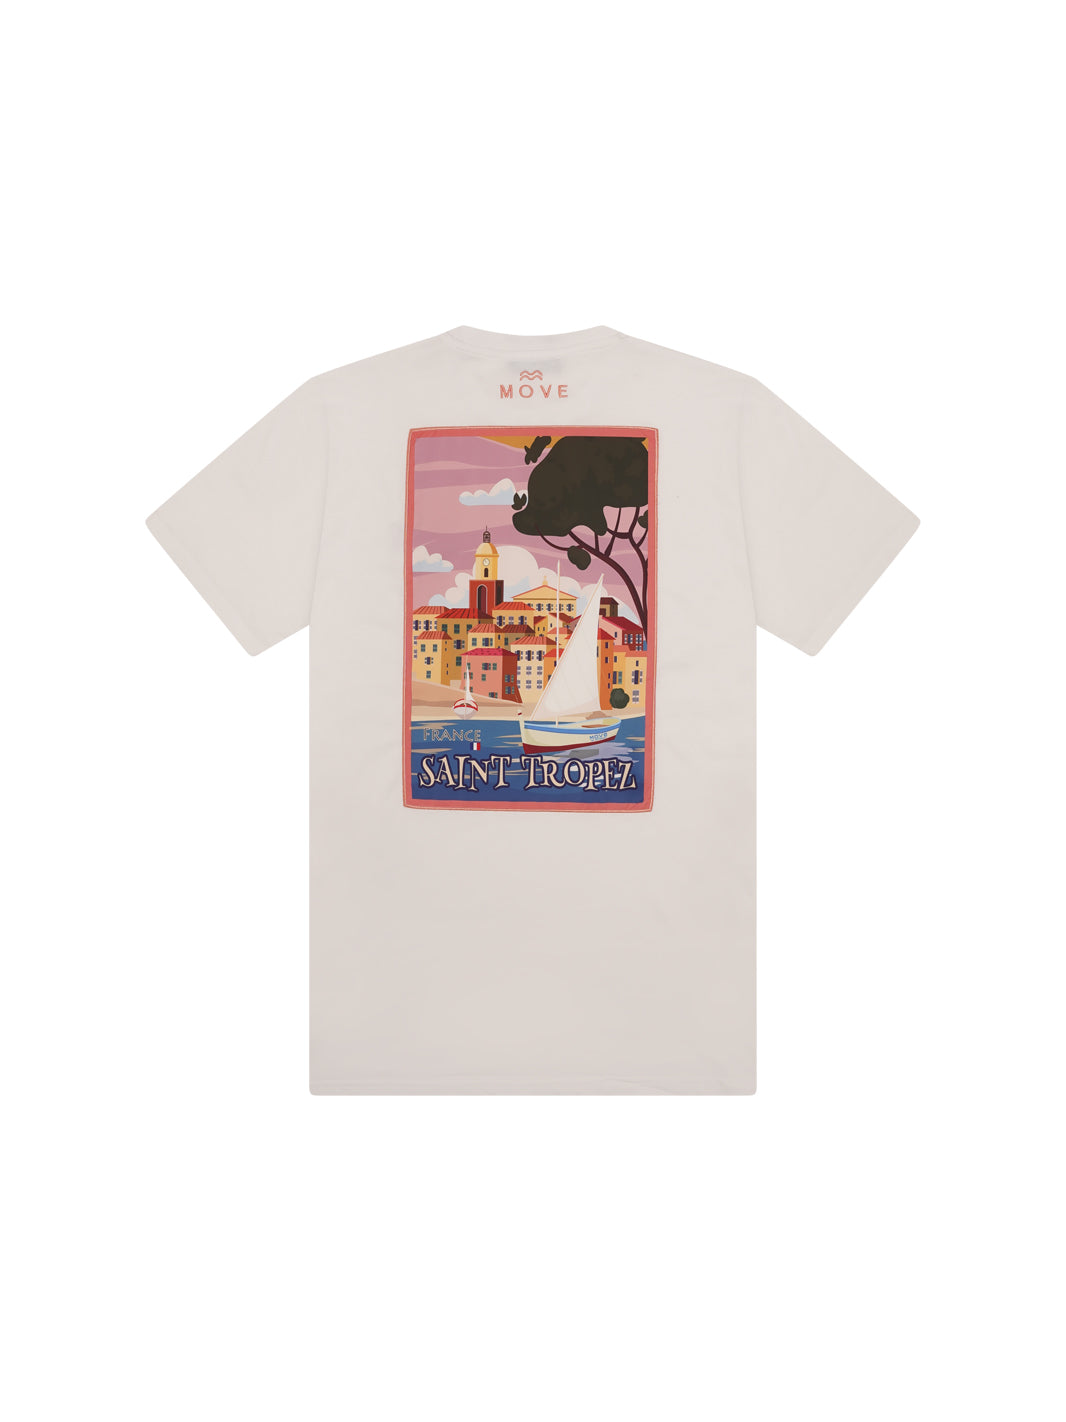 TS Print Boy Saint Tropez - T-Shirt - Move Beachwear